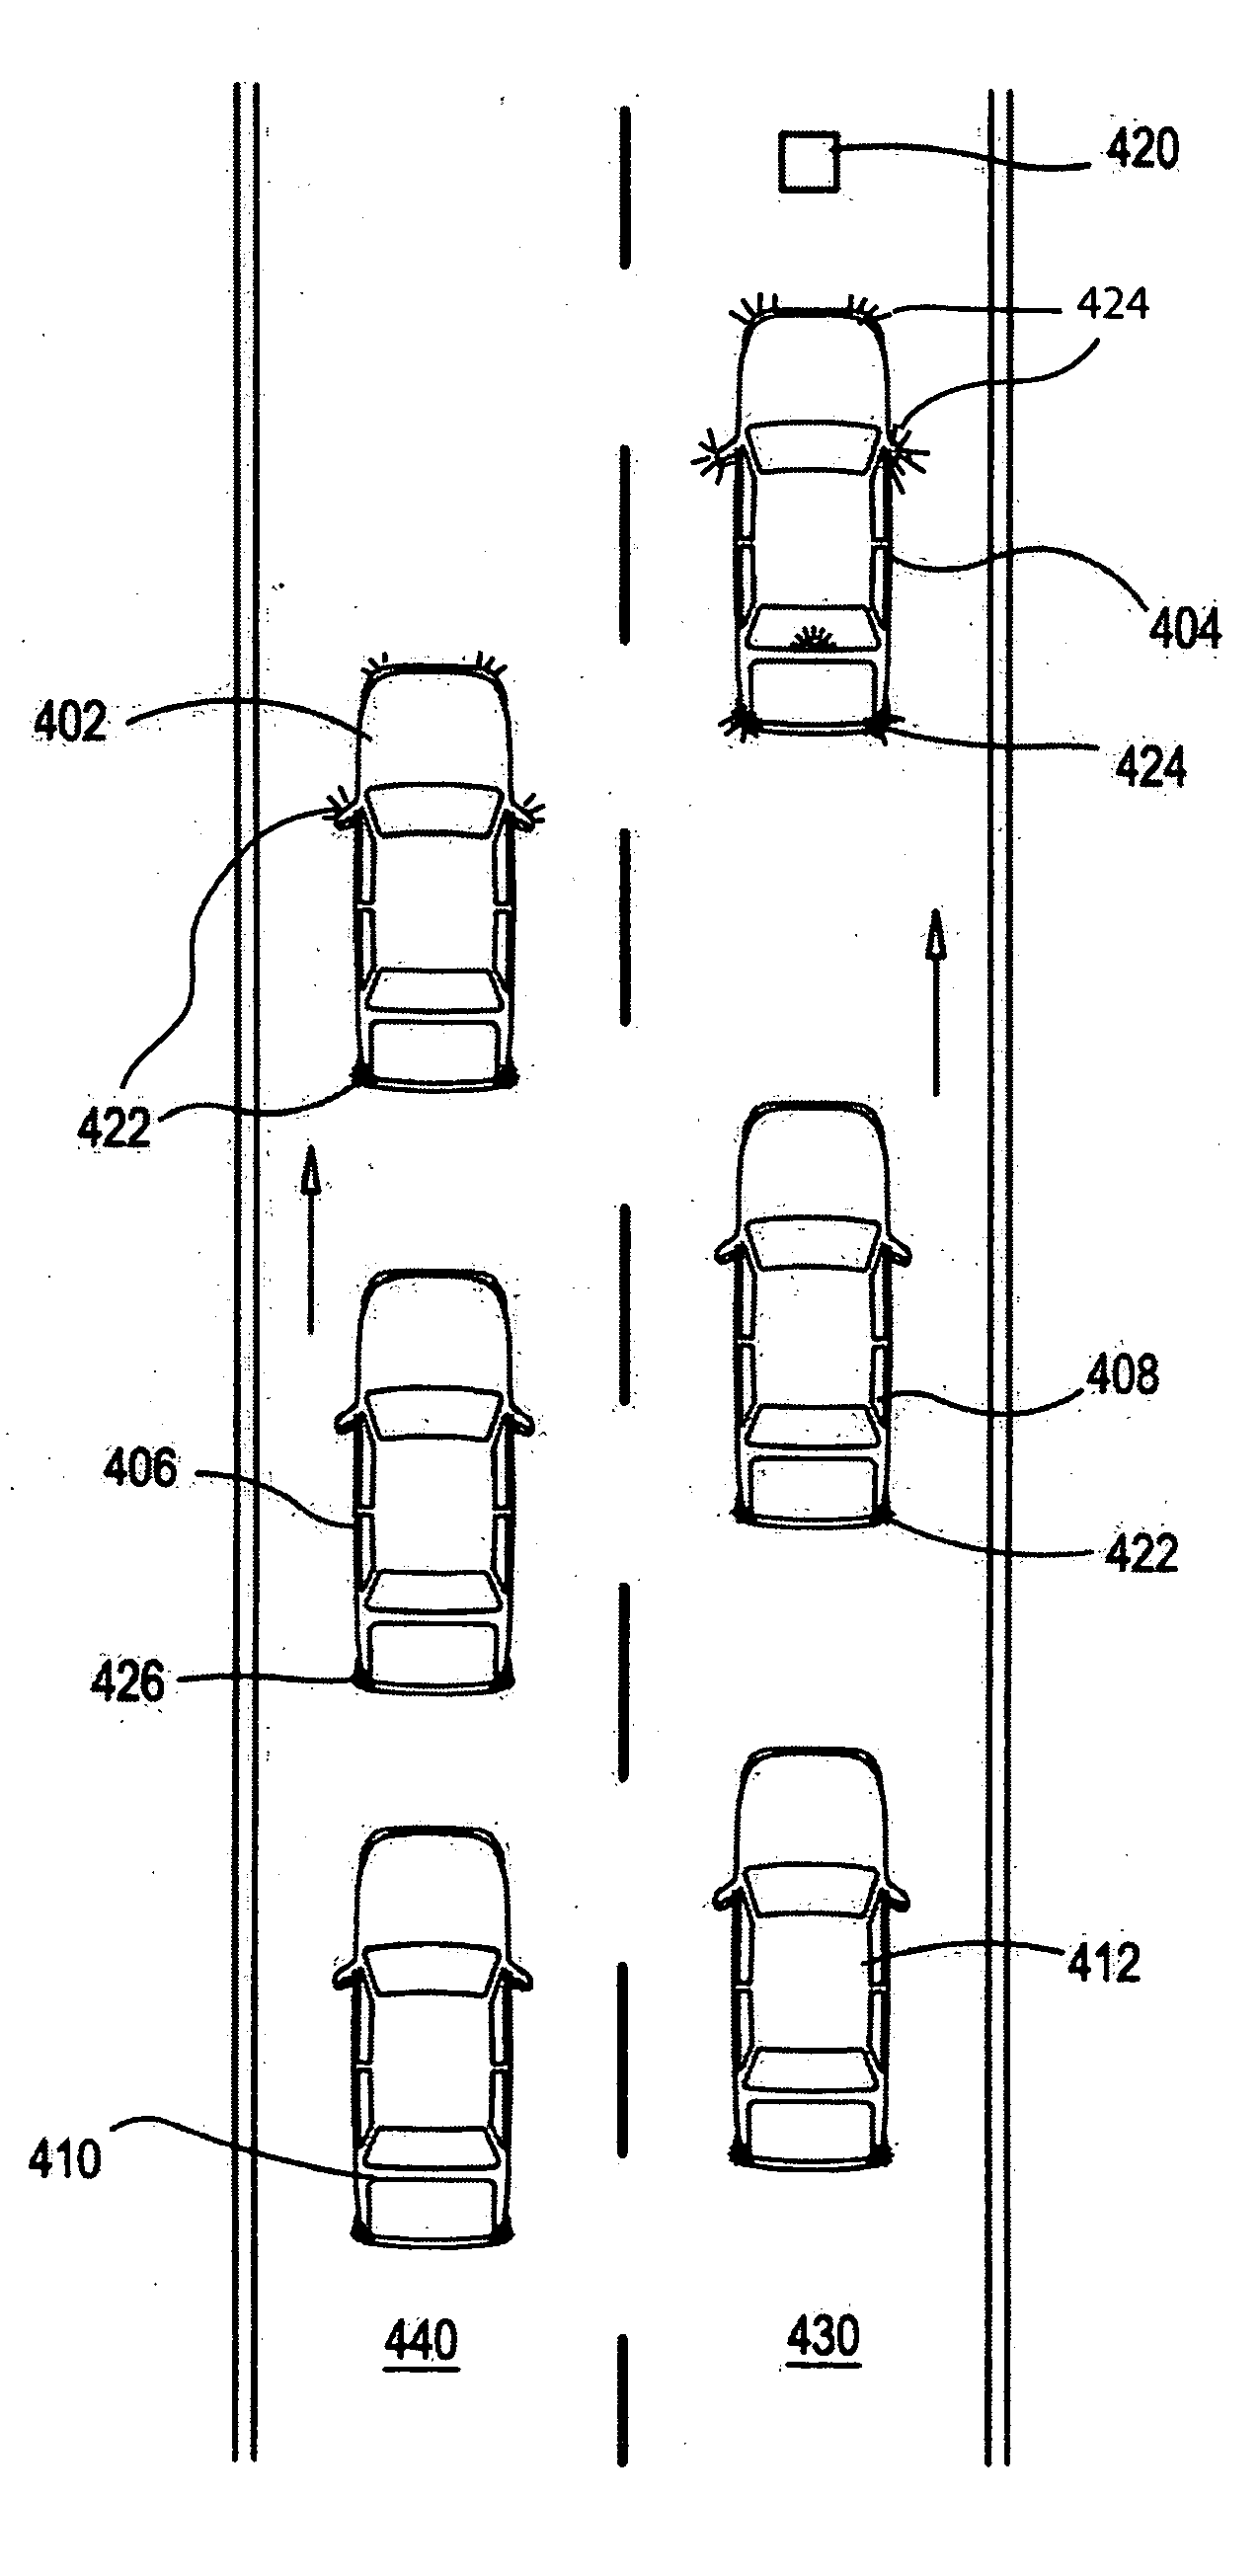 Vehicle accelerator and brake indicators